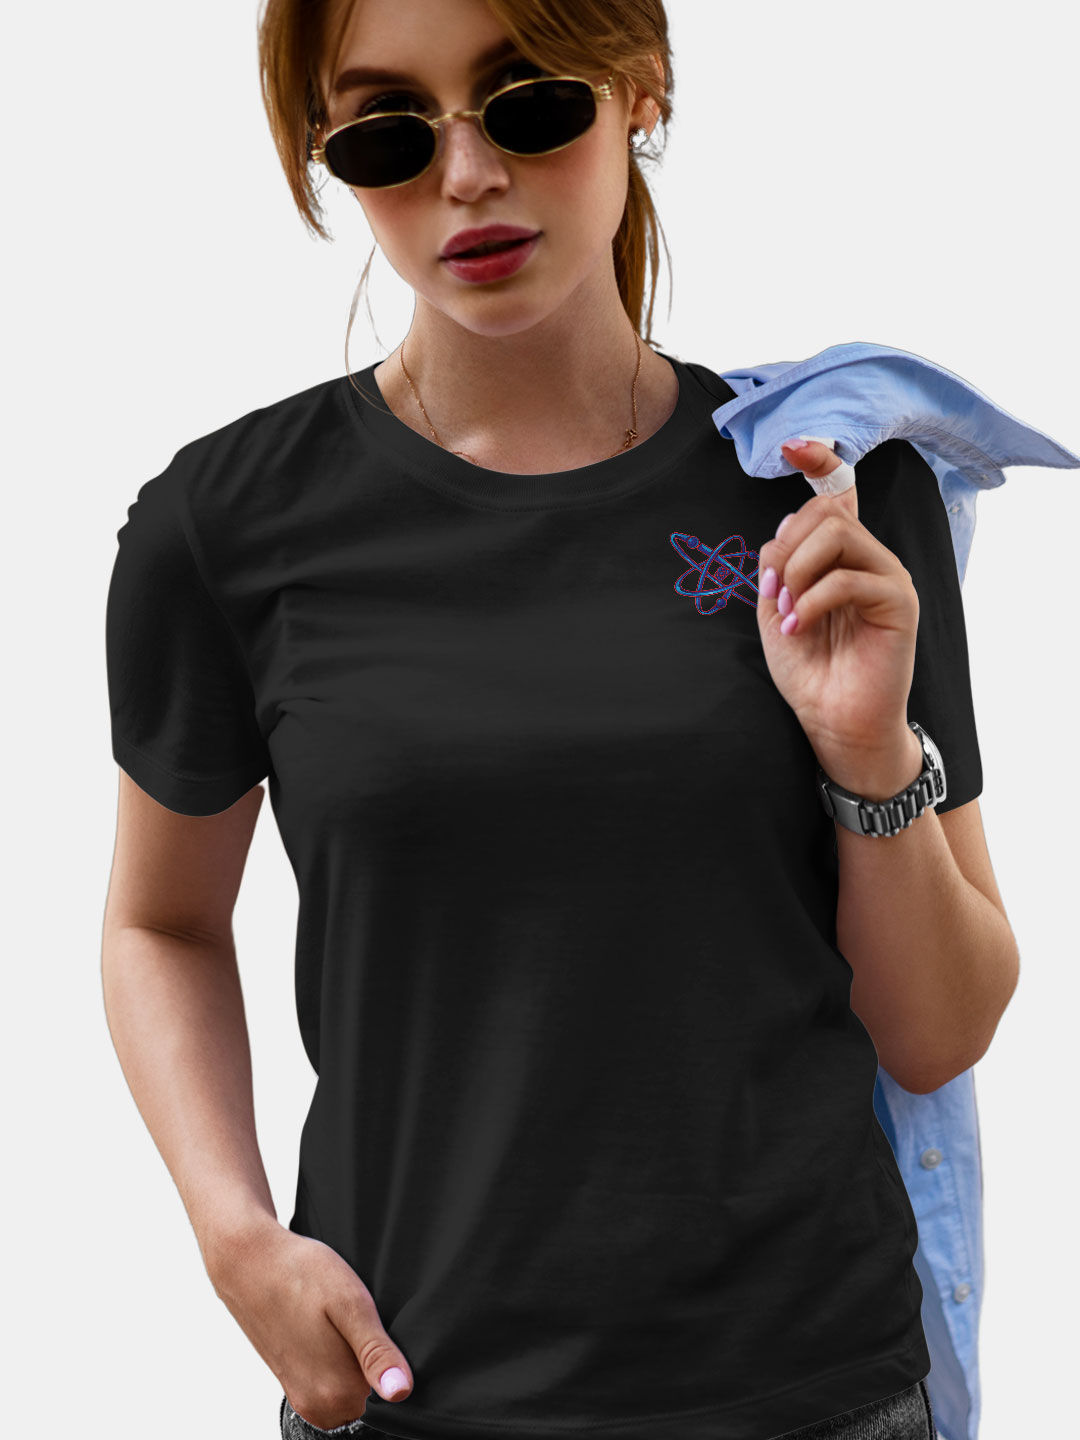 Atom Smasher Black - Womens Designer T-Shirts